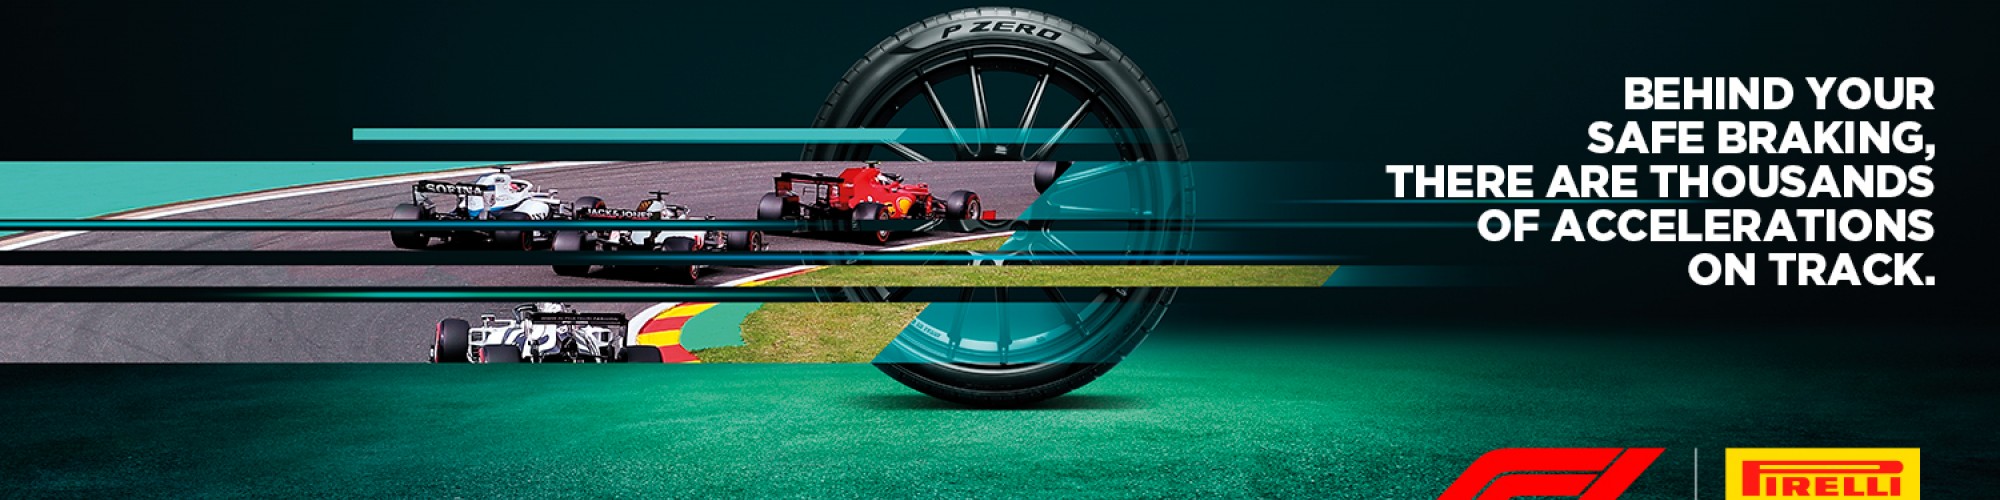 Pirelli Motorsport cover image